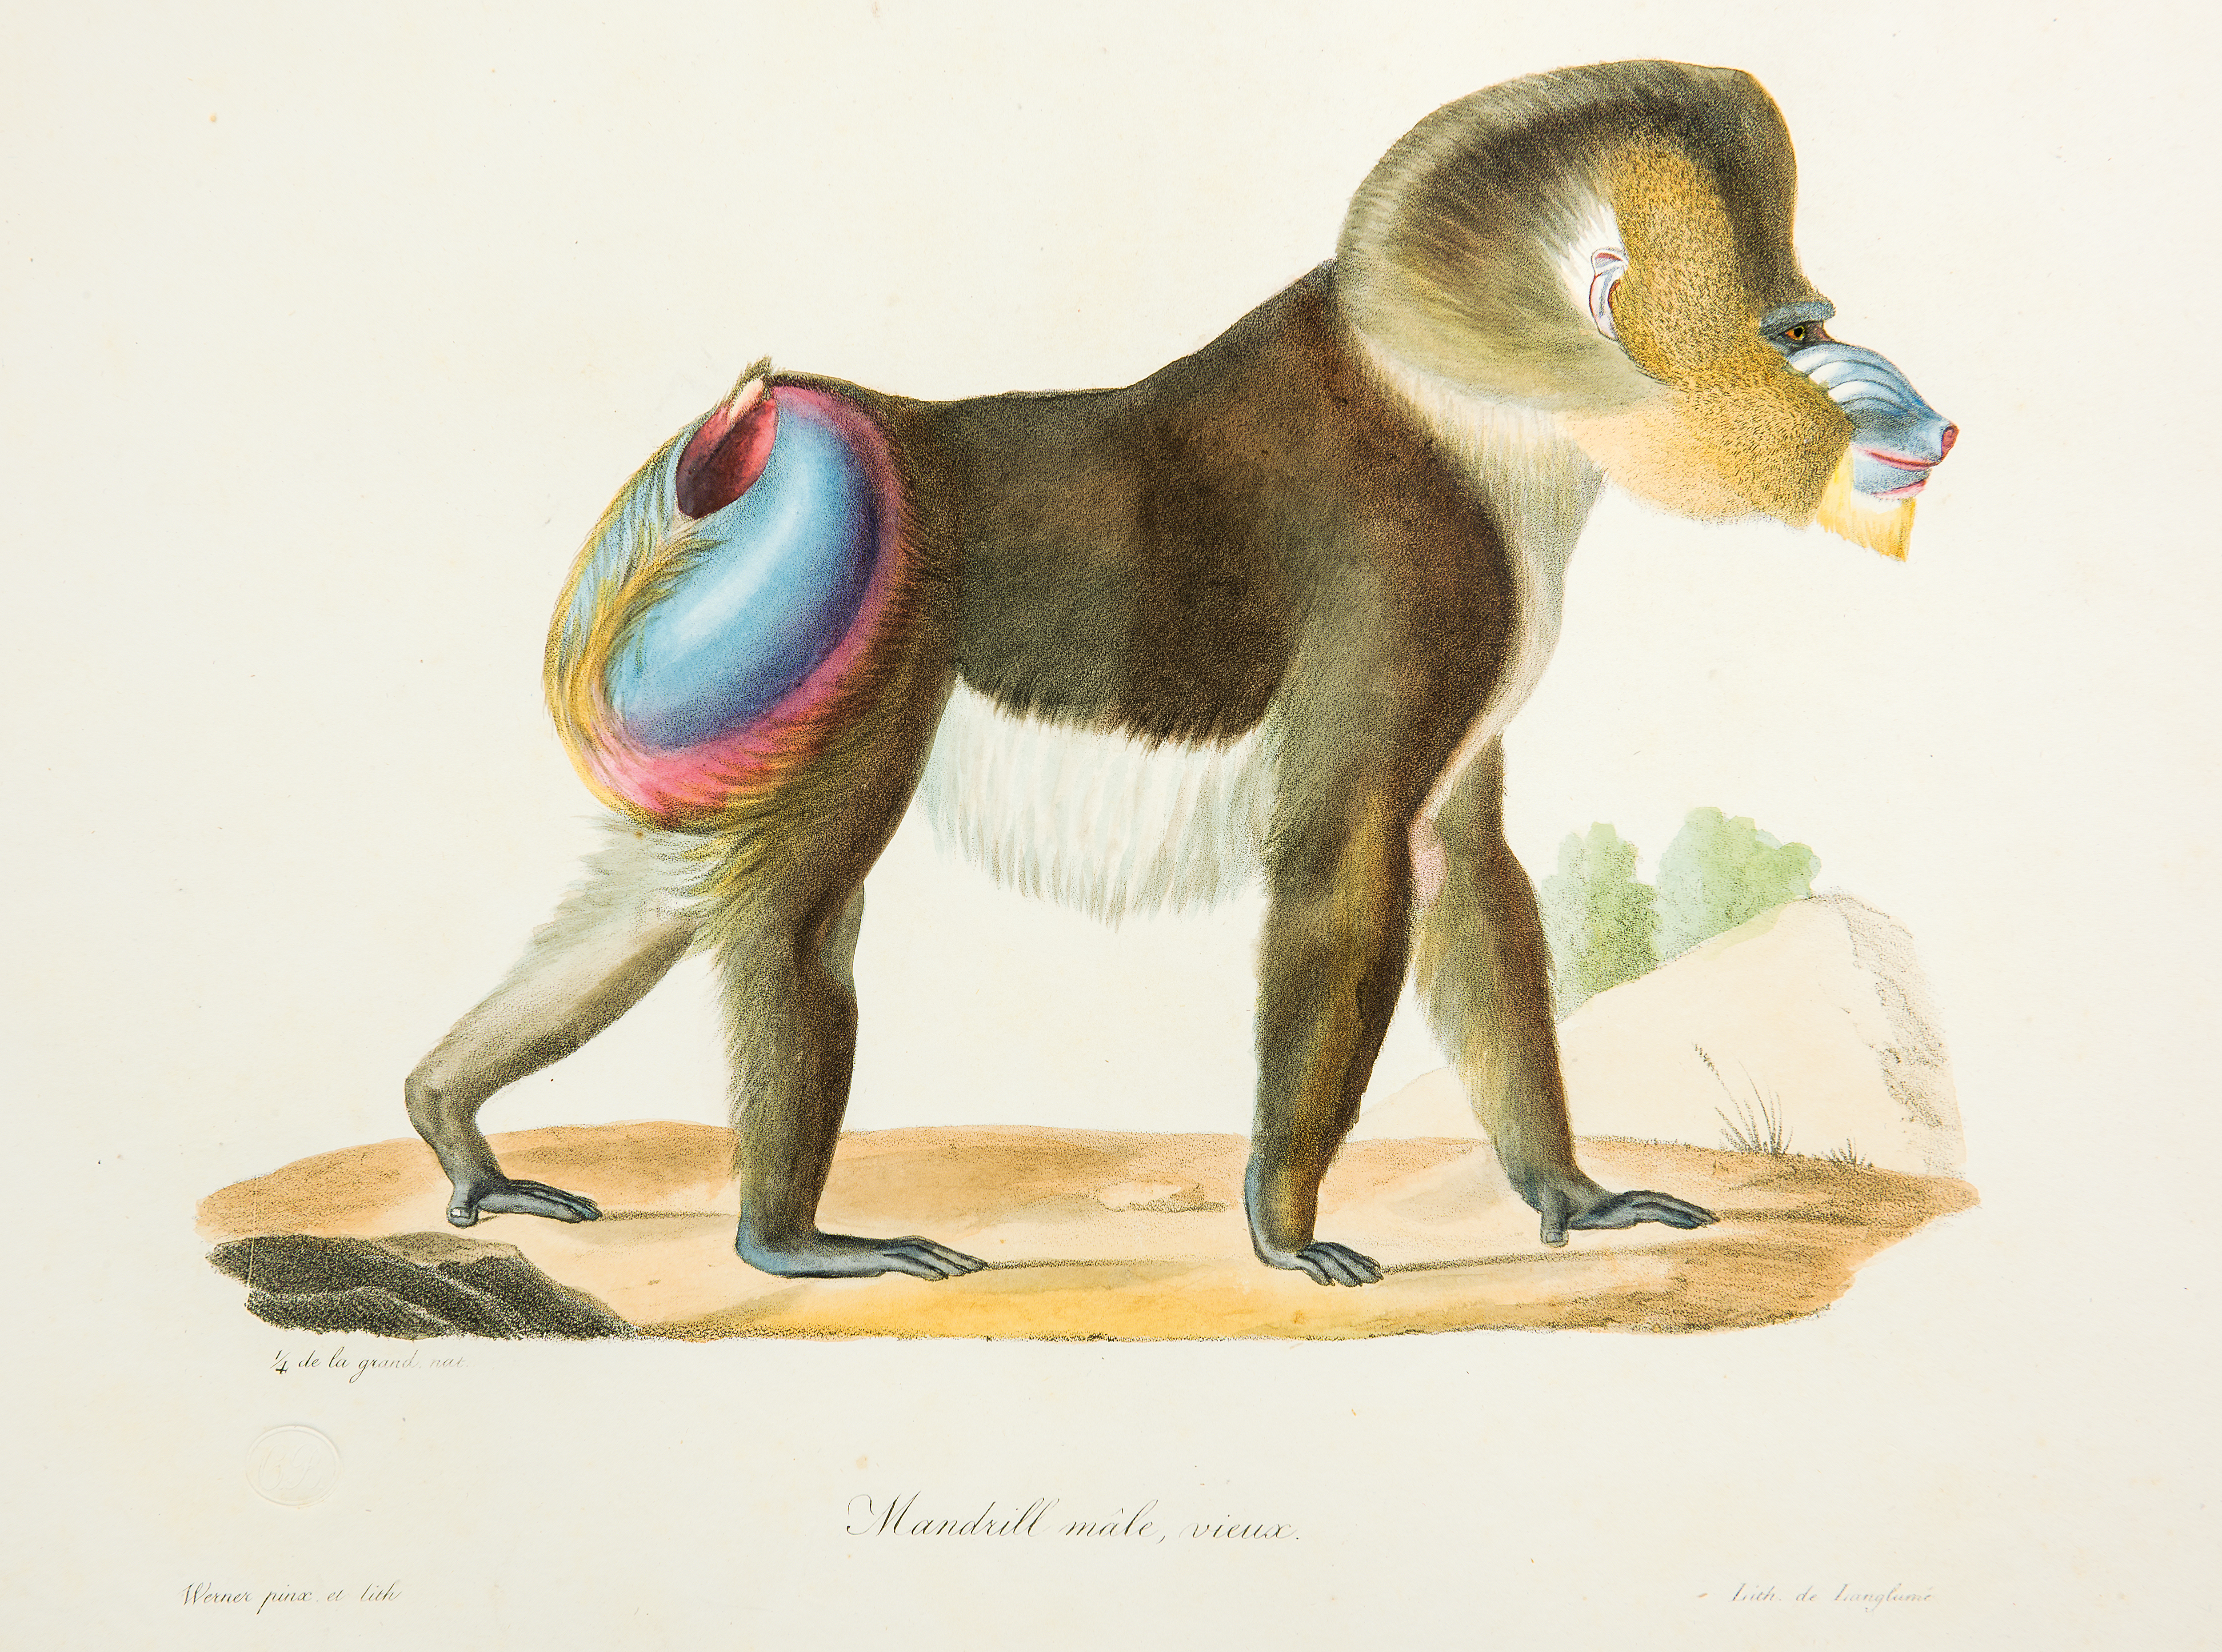 Mandryl by C.P. Lasteyrie ner de Saillant after Jean-Charles Werner - 1822–1829 